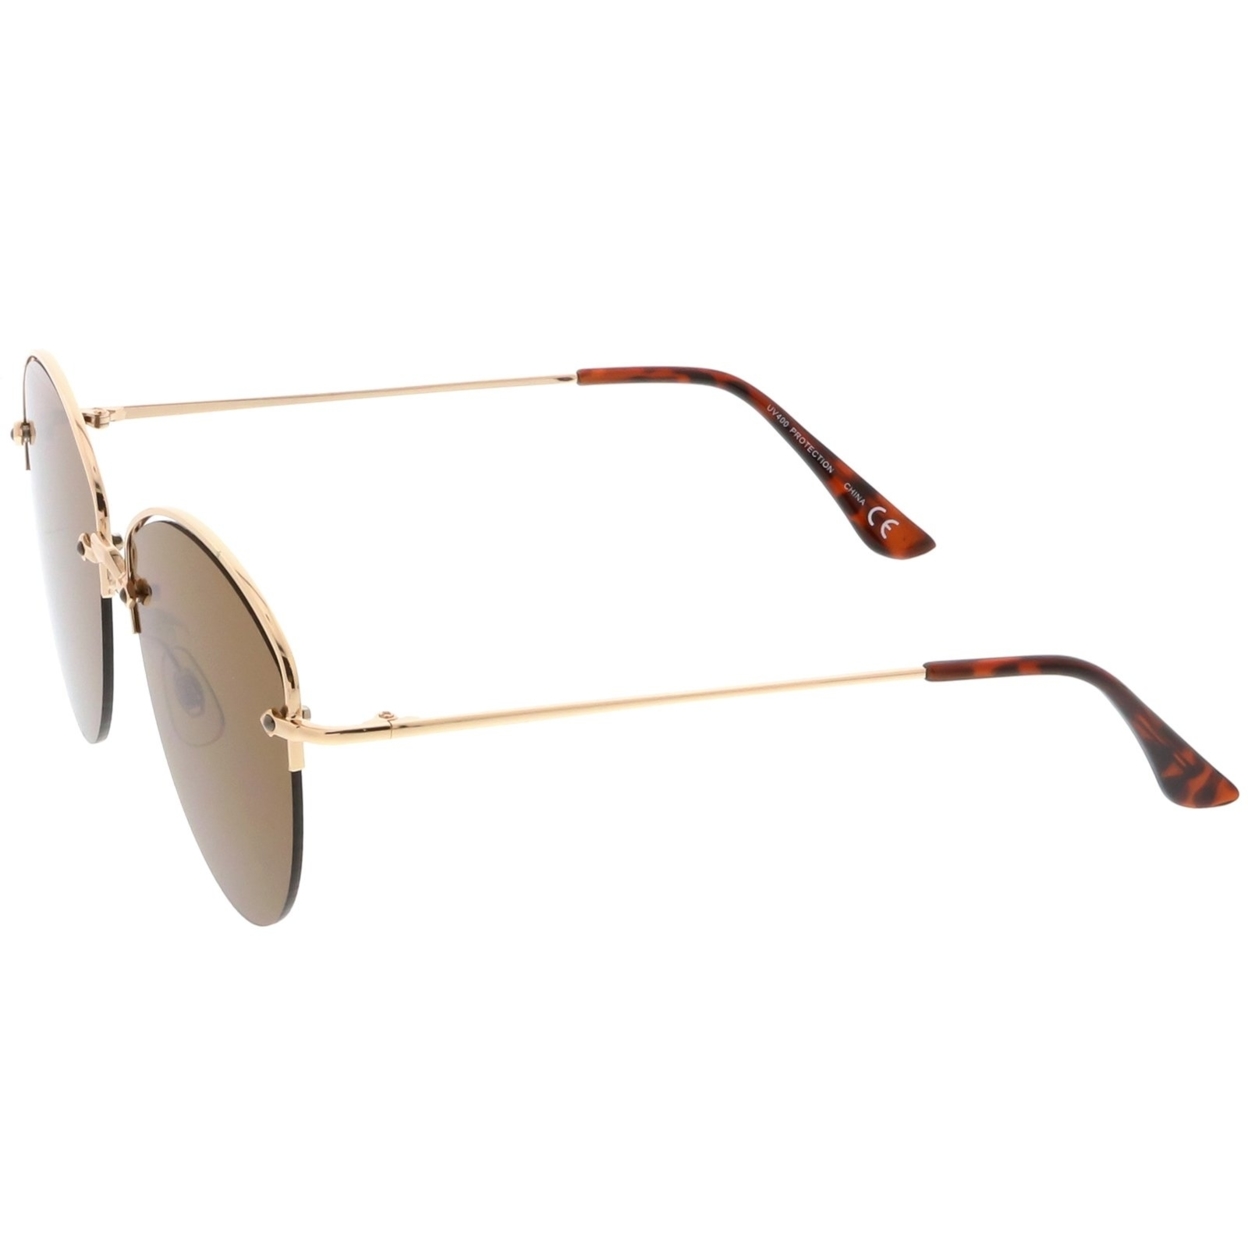 Modern Metal Nose Bridge Flat Lens Semi-Rimless Sunglasses 60mm - Silver / Smoke